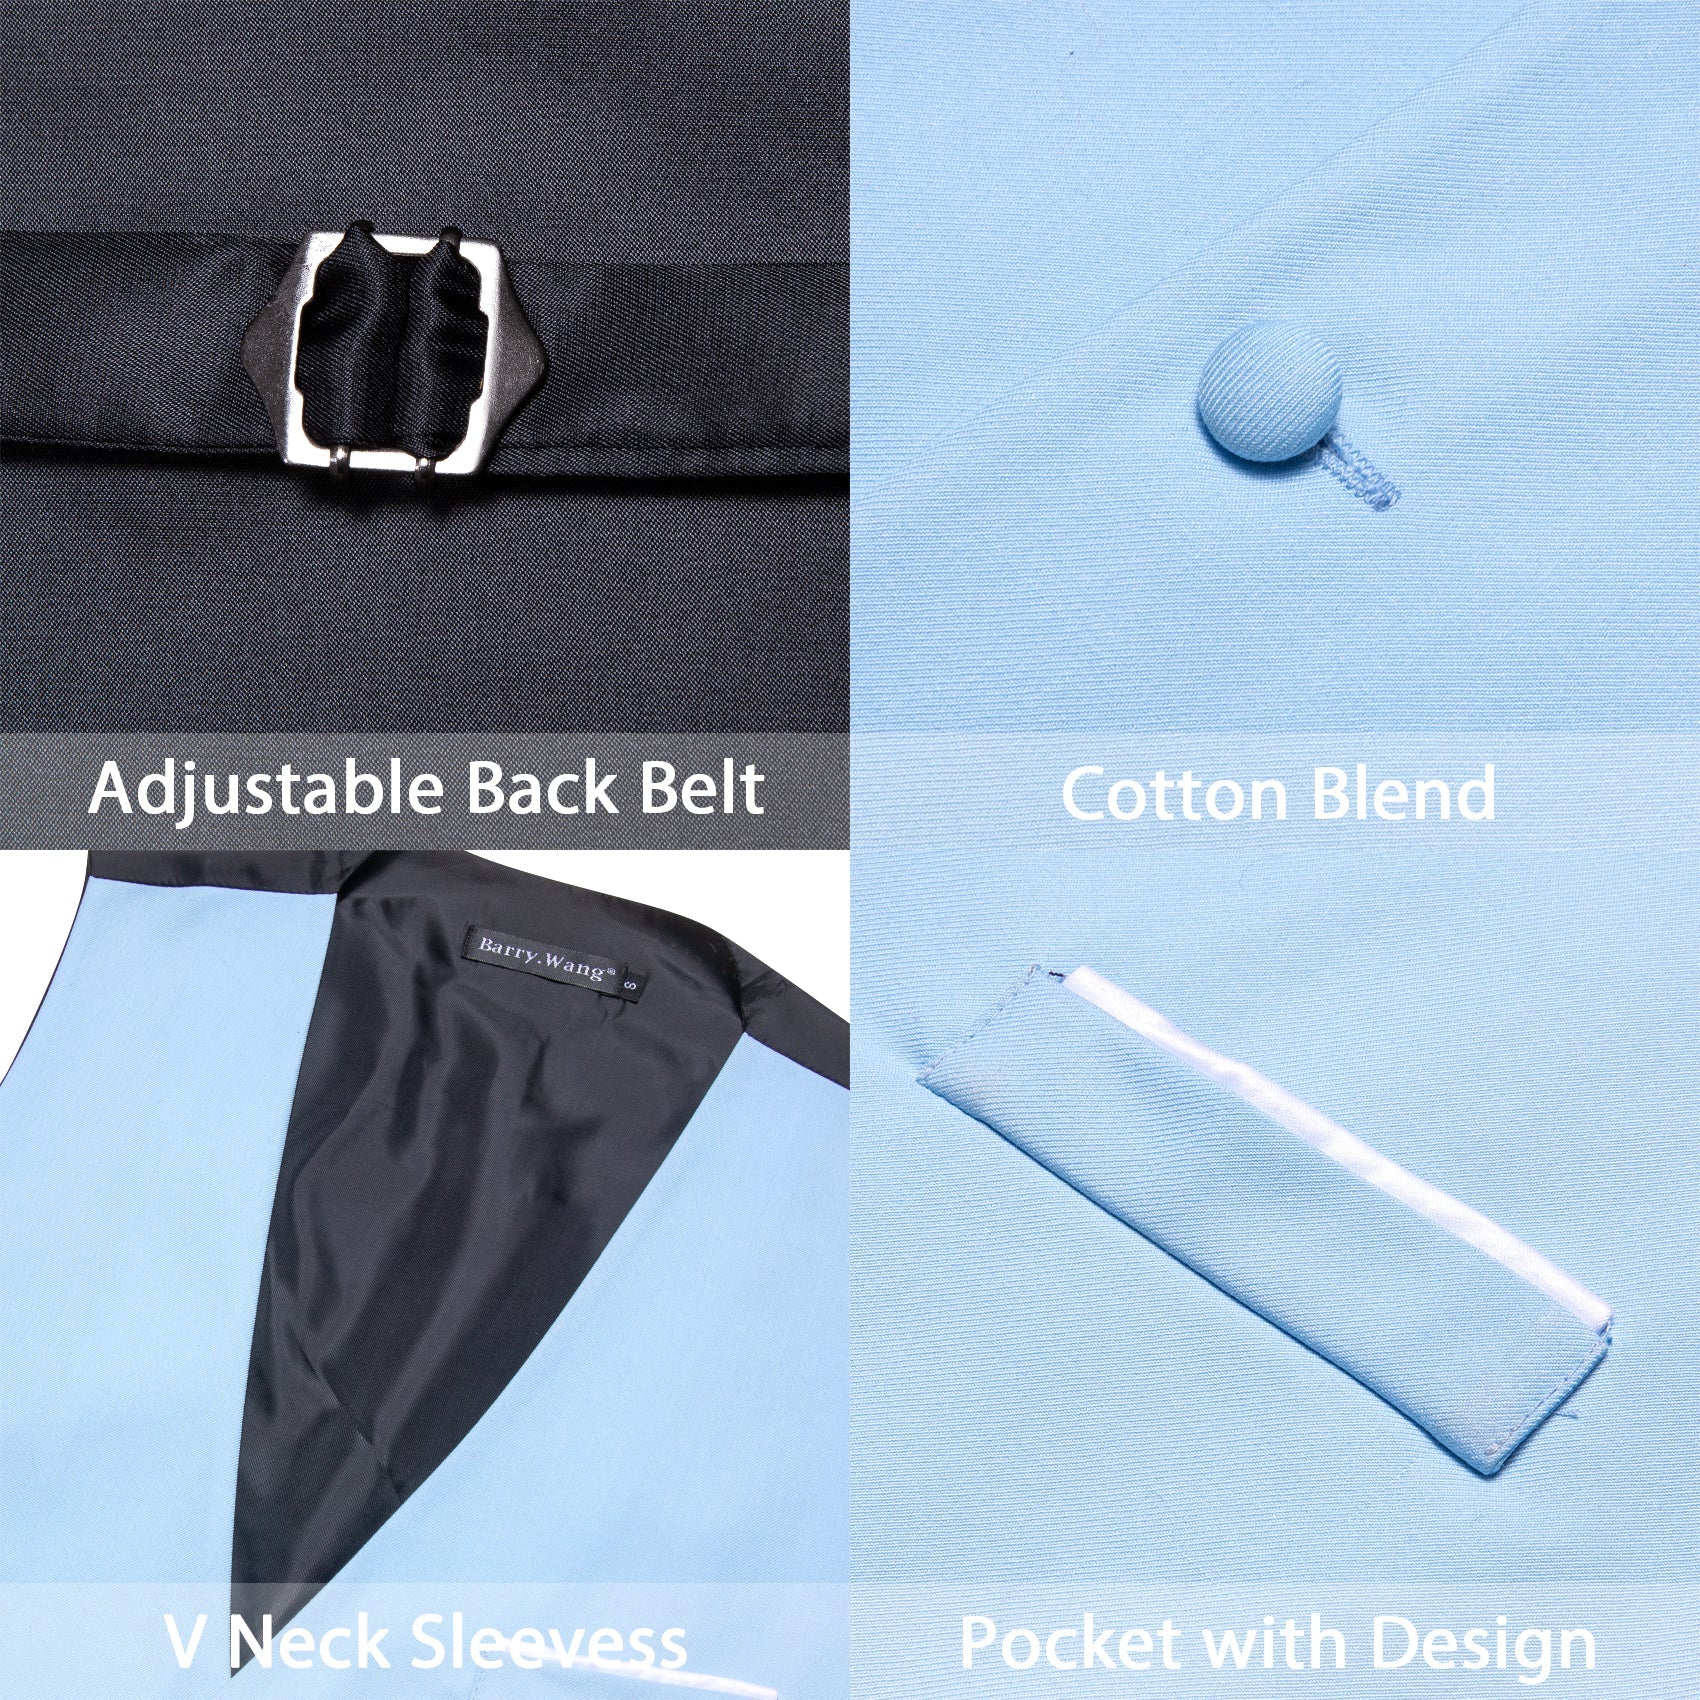 Light Blue Solid Necktie Bowtie Hanky Cufflinks Waistcoat Vest Set